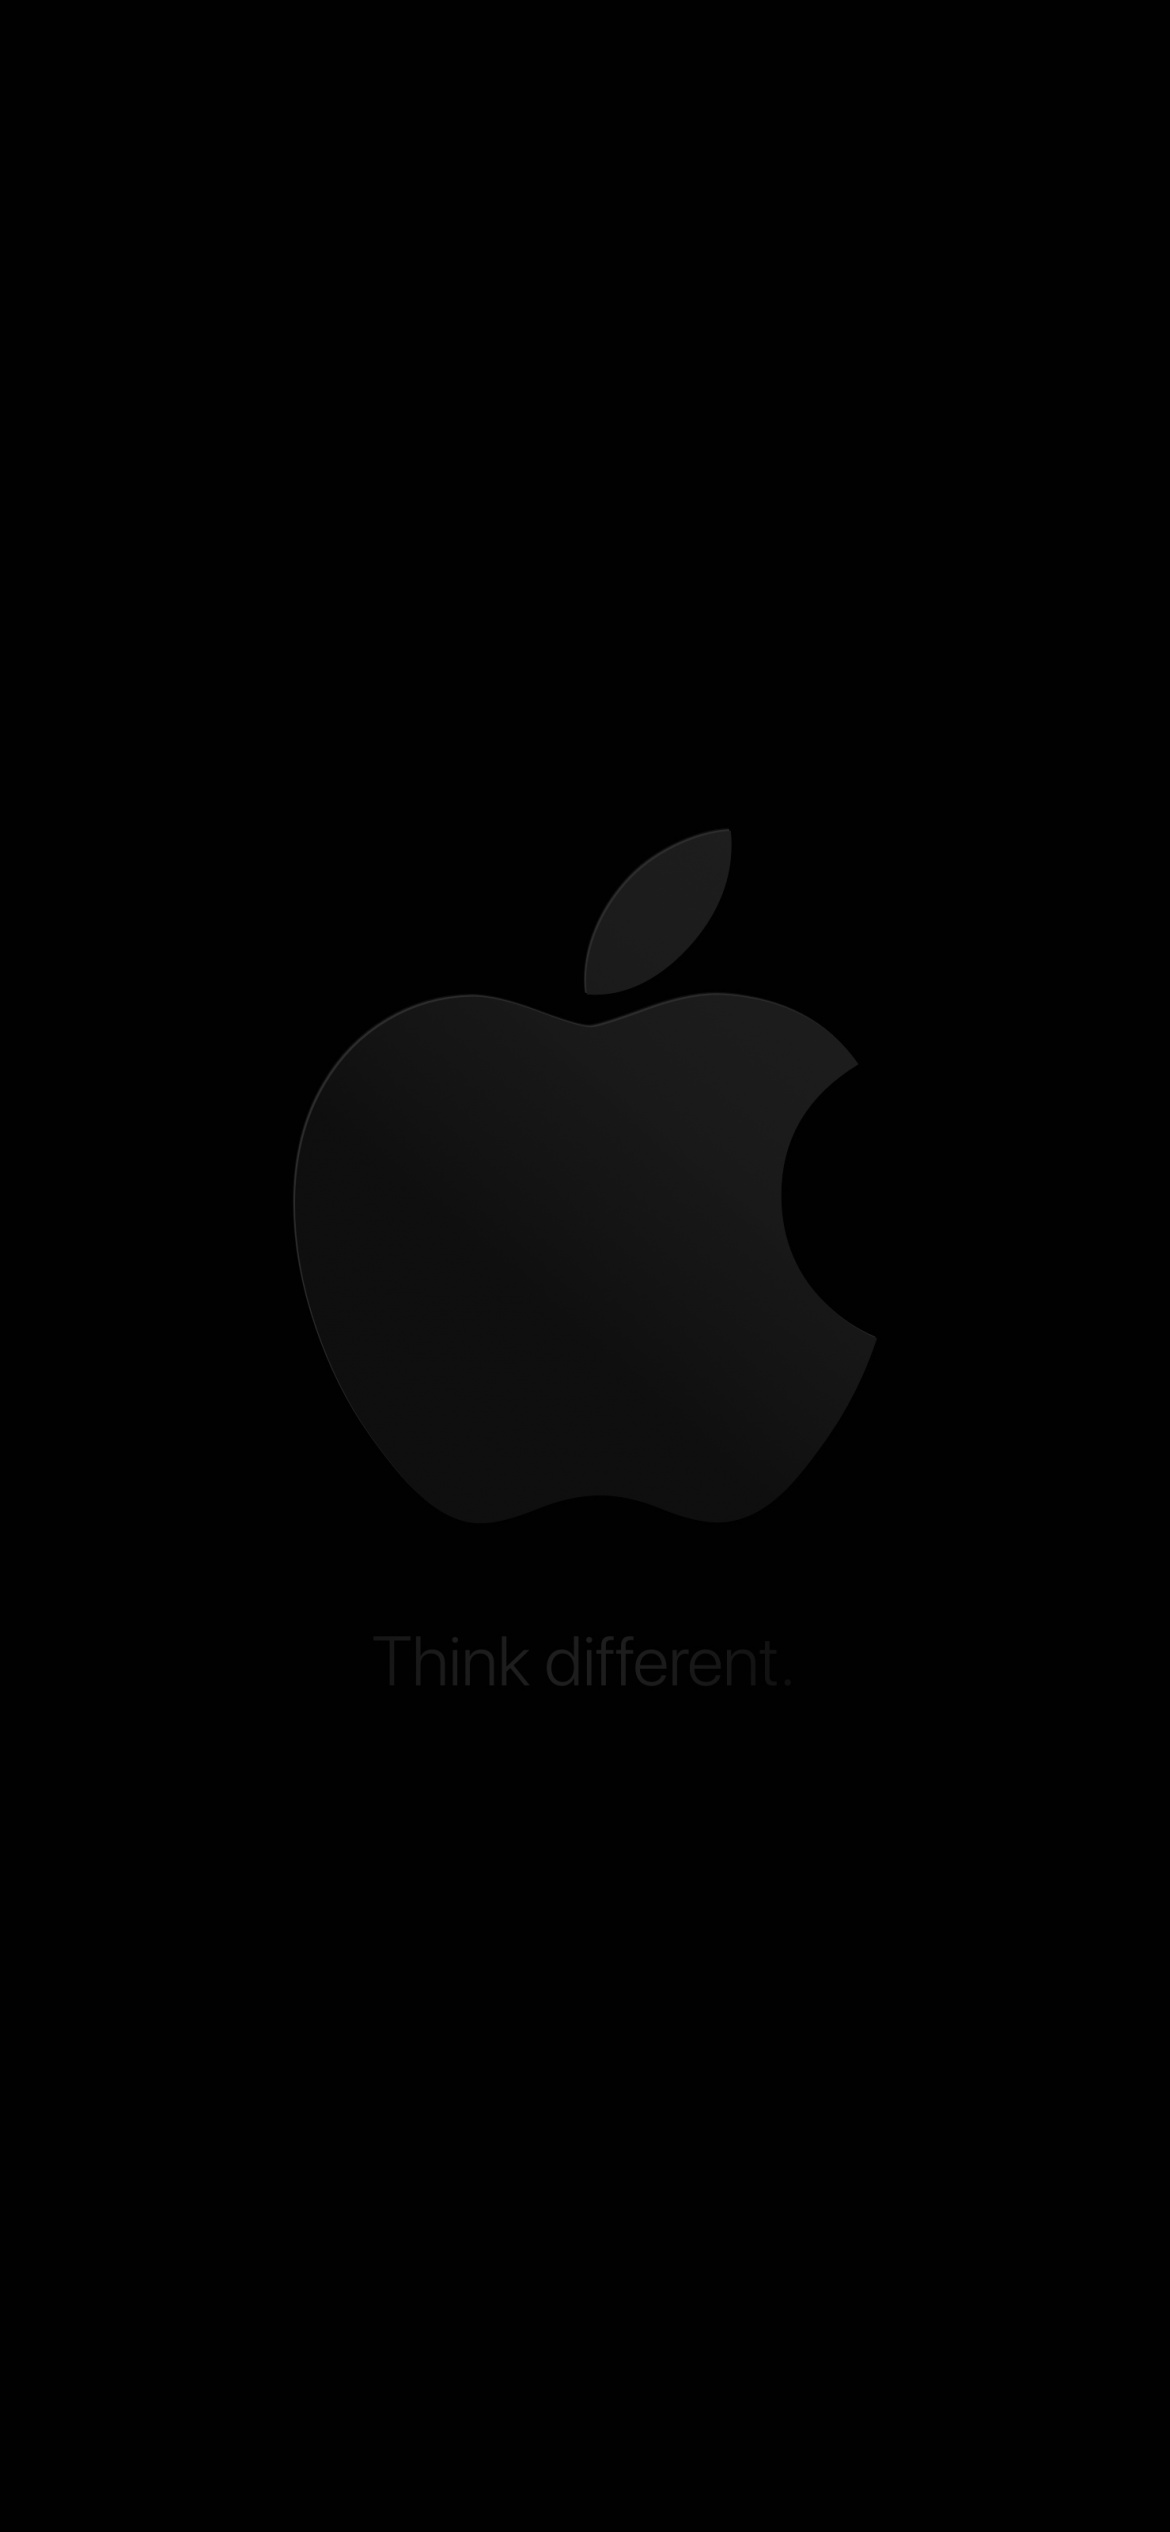 Top 999+ Apple Logo Wallpaper Full HD, 4K✓Free to Use